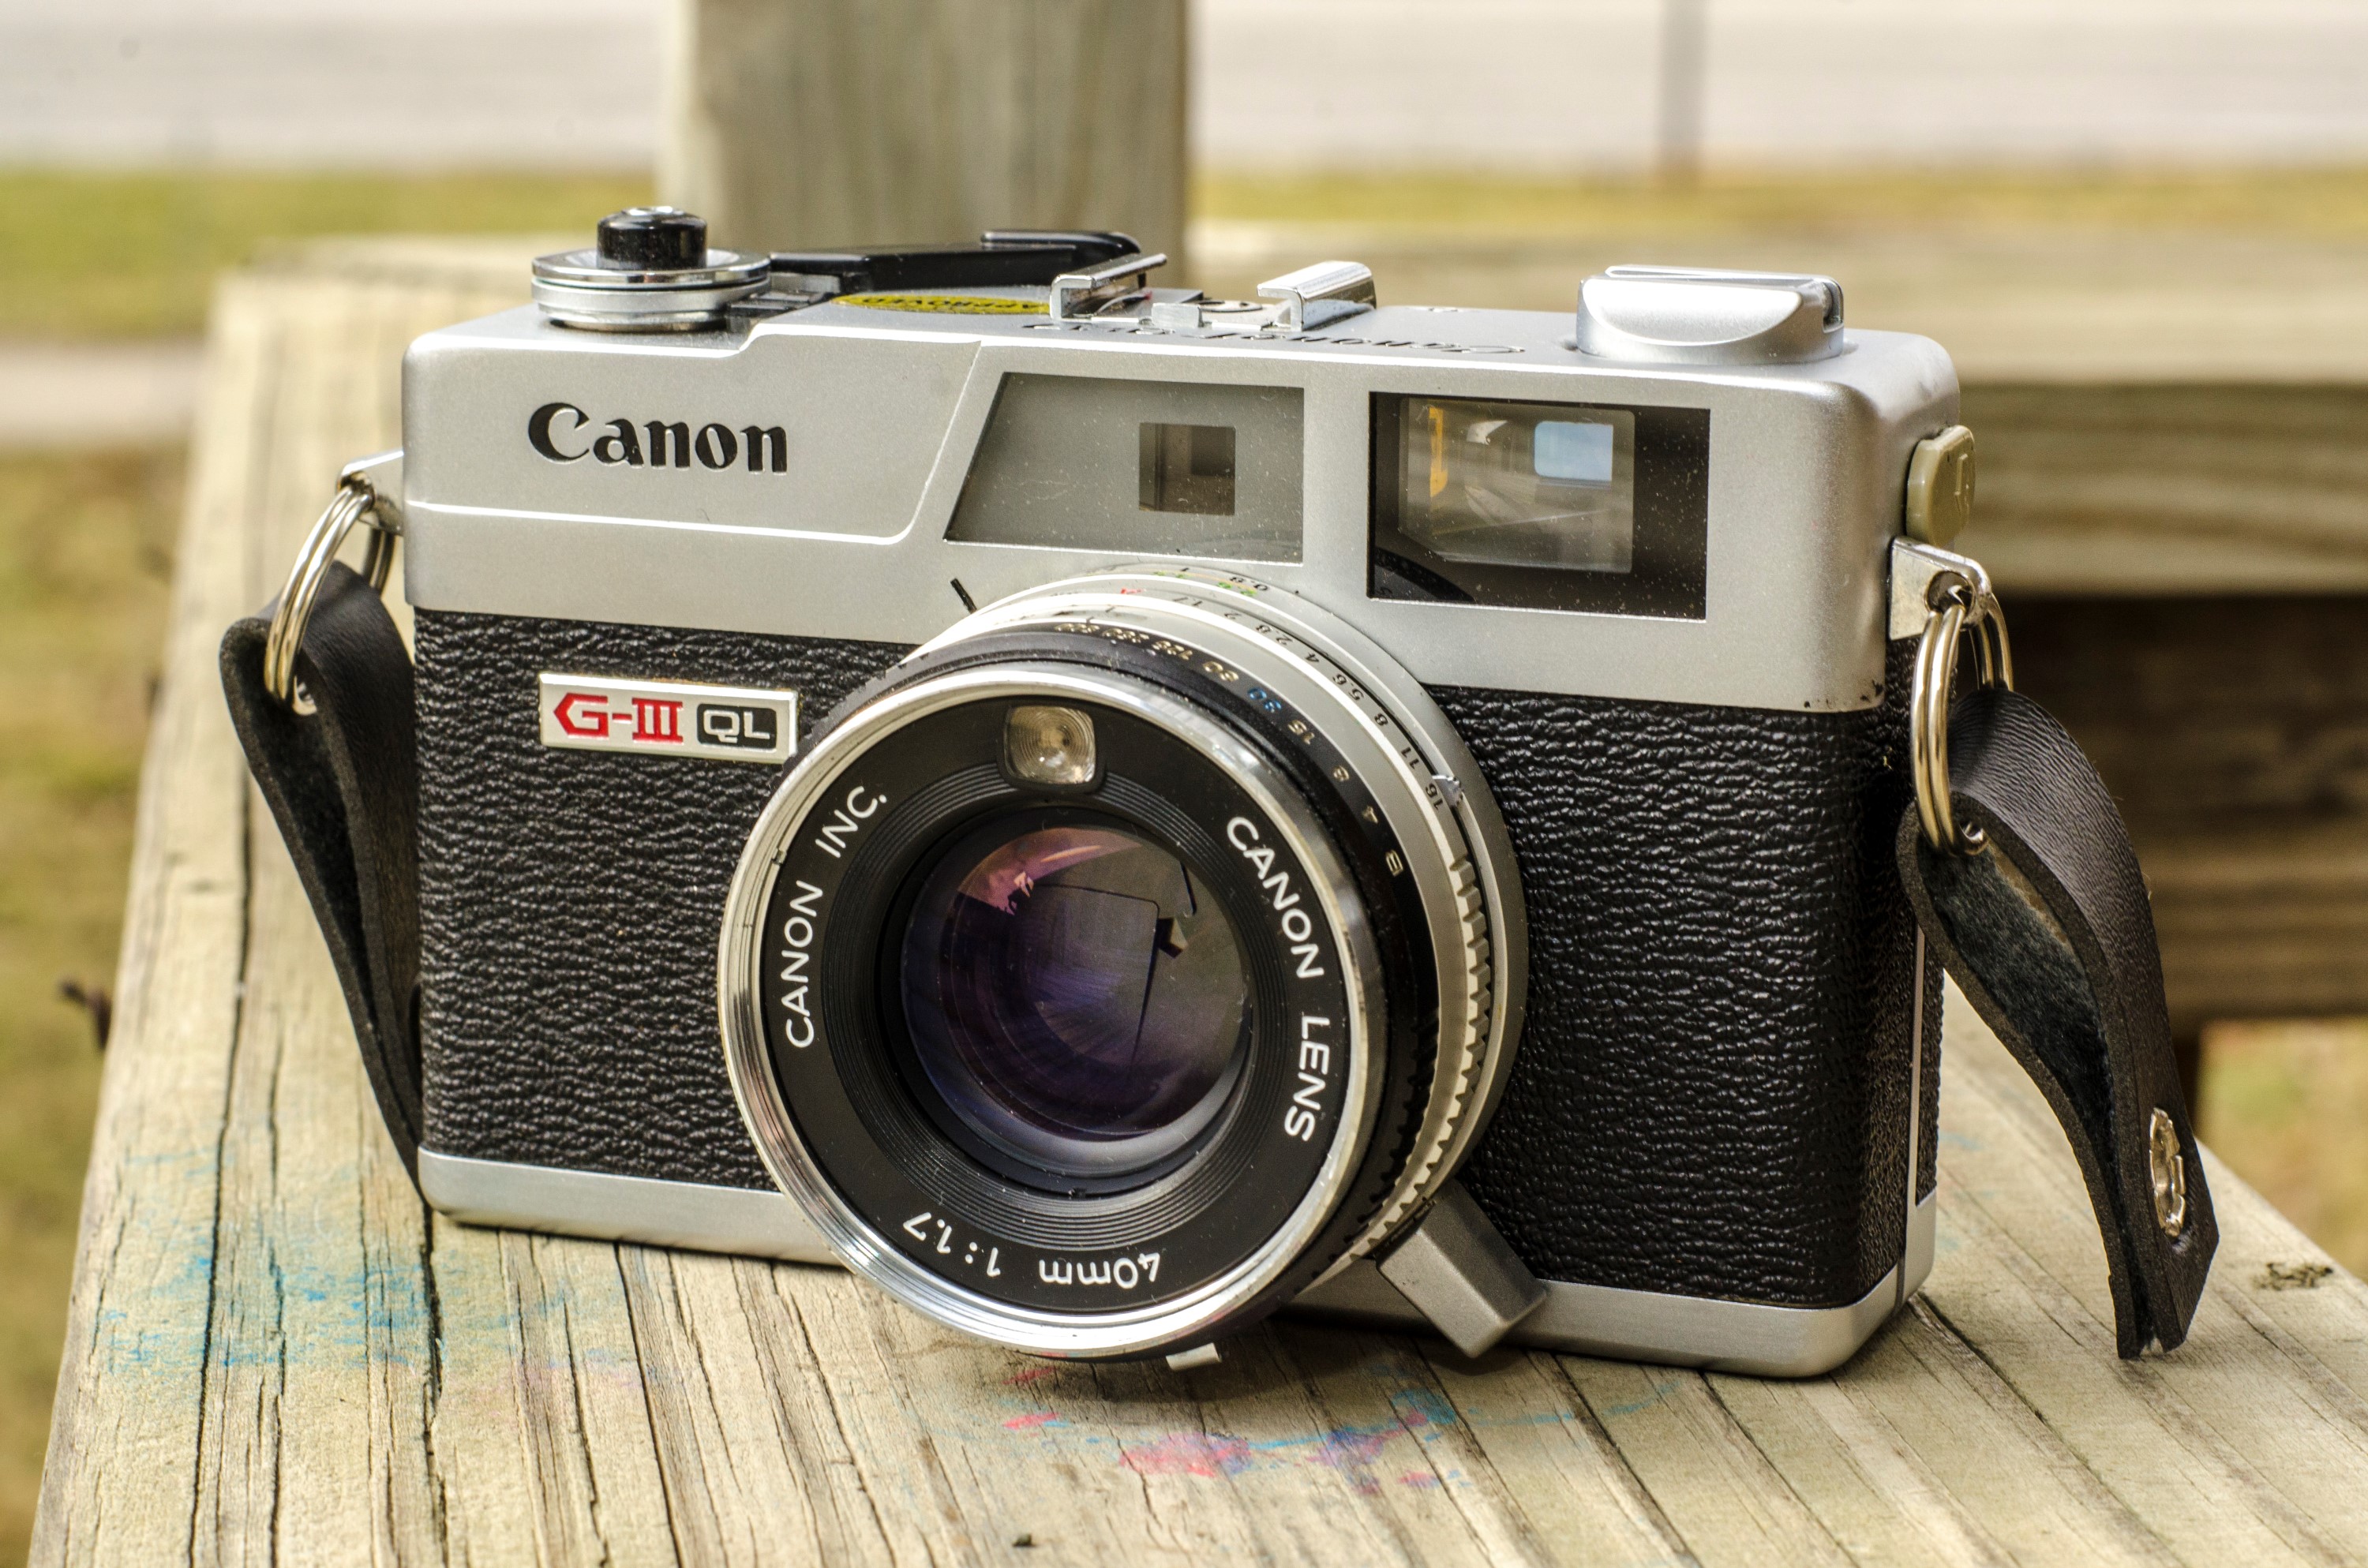 Canonet G III QL17 - vintage camera